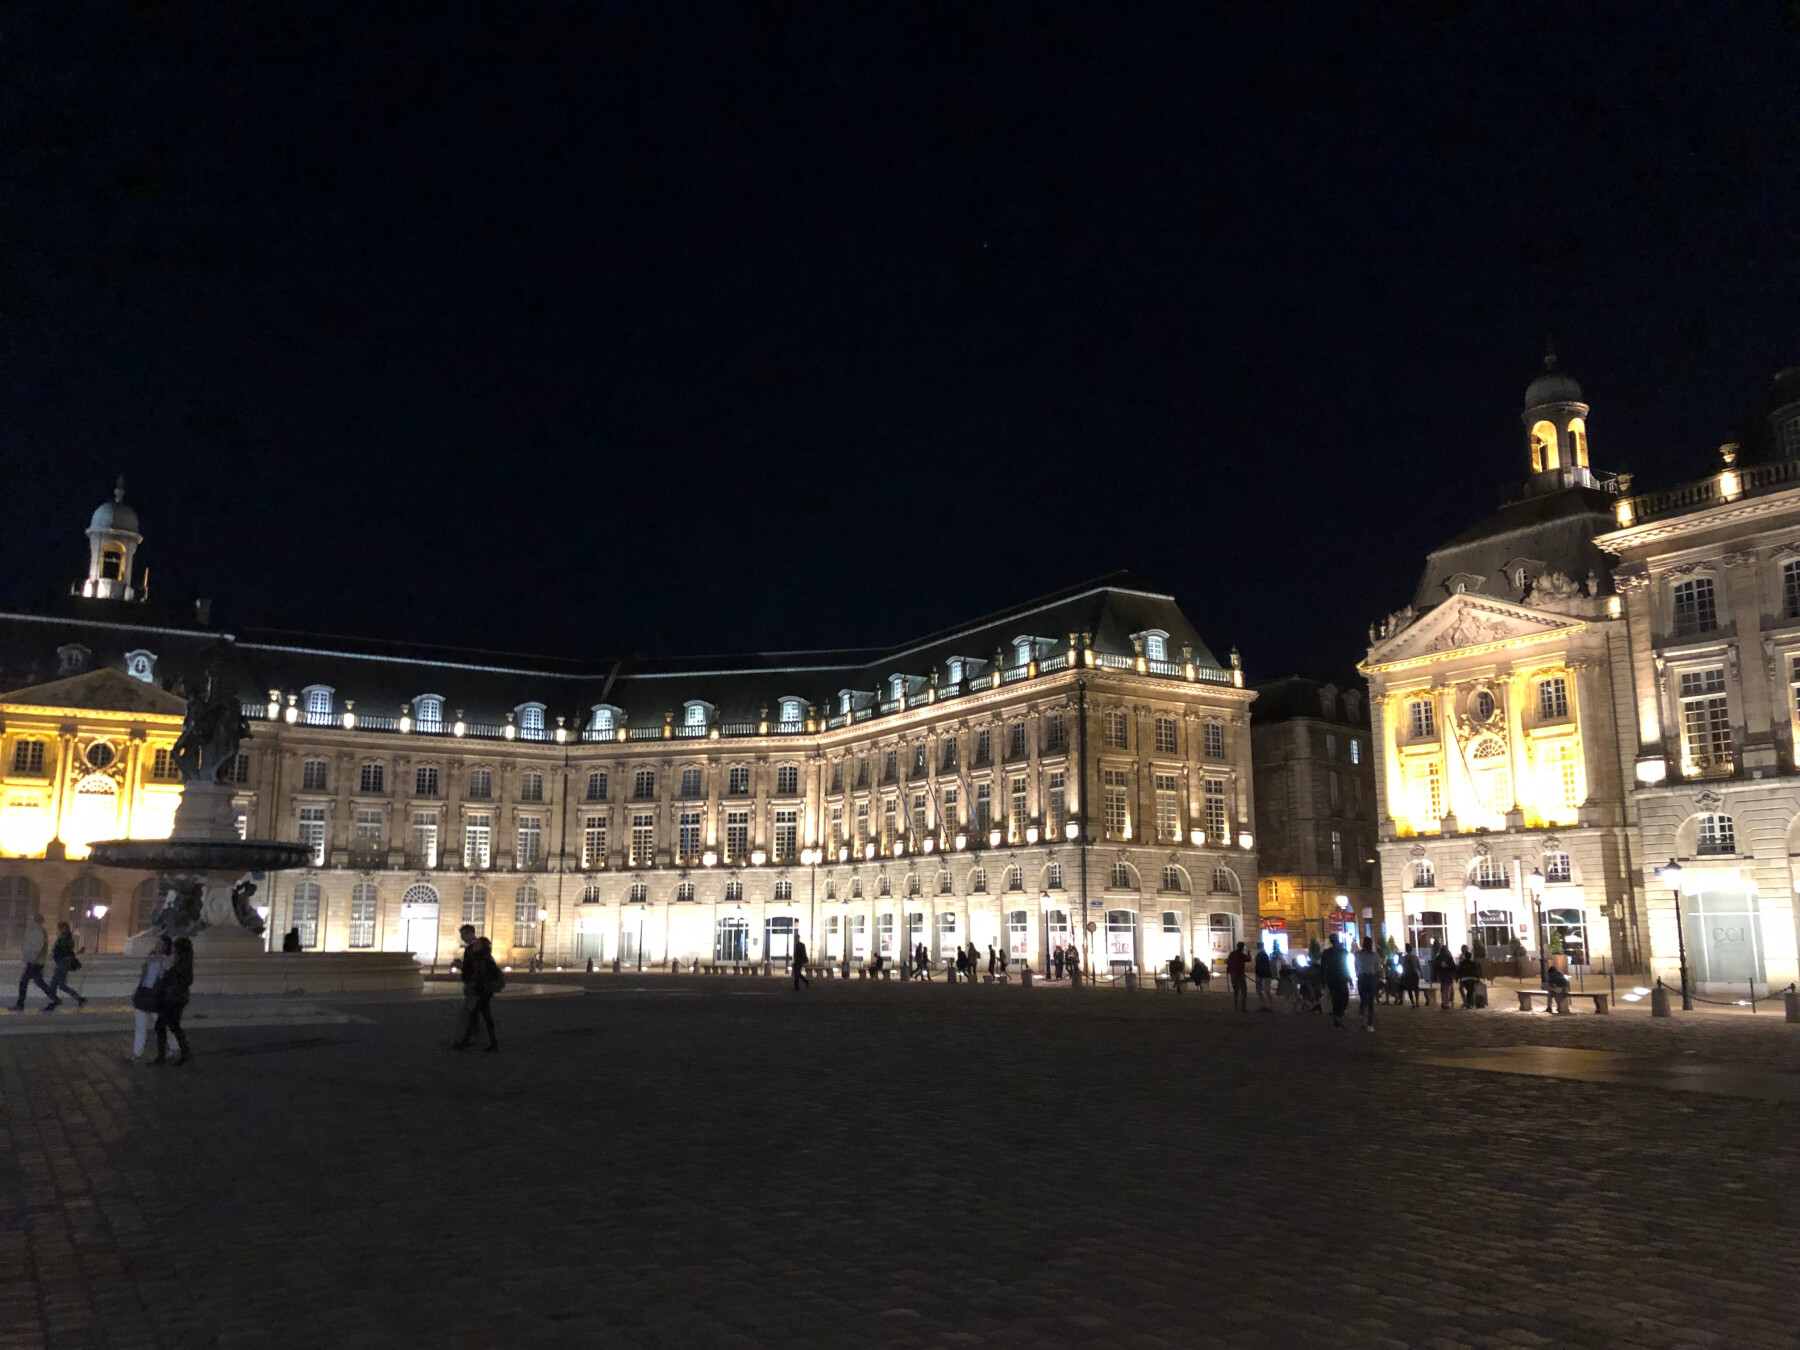 Bordeaux 2018 – “A Game of Two Halves”